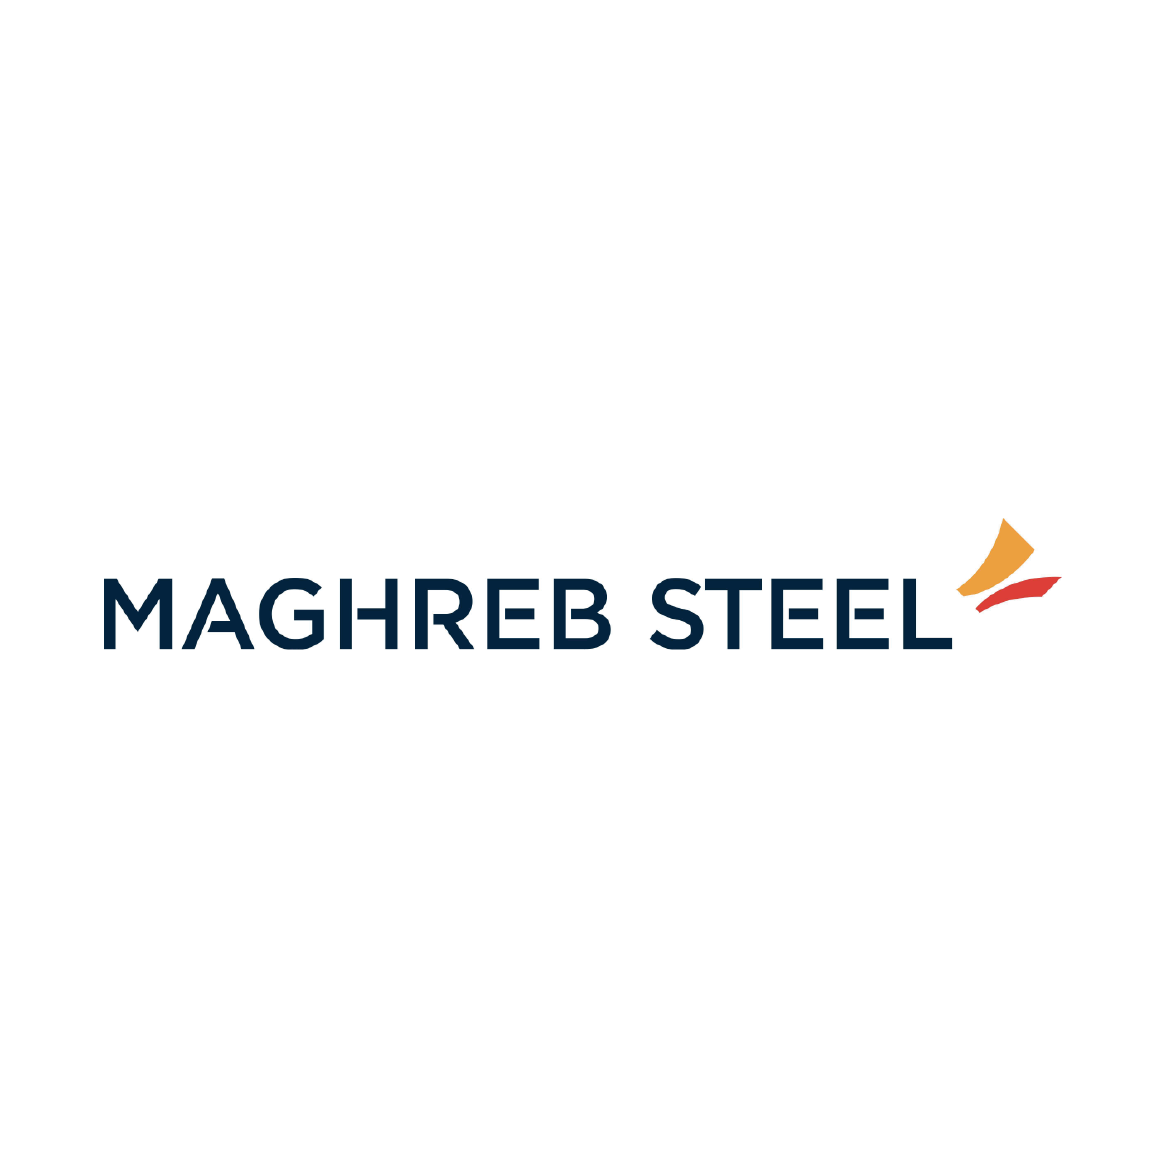 maghreb steel